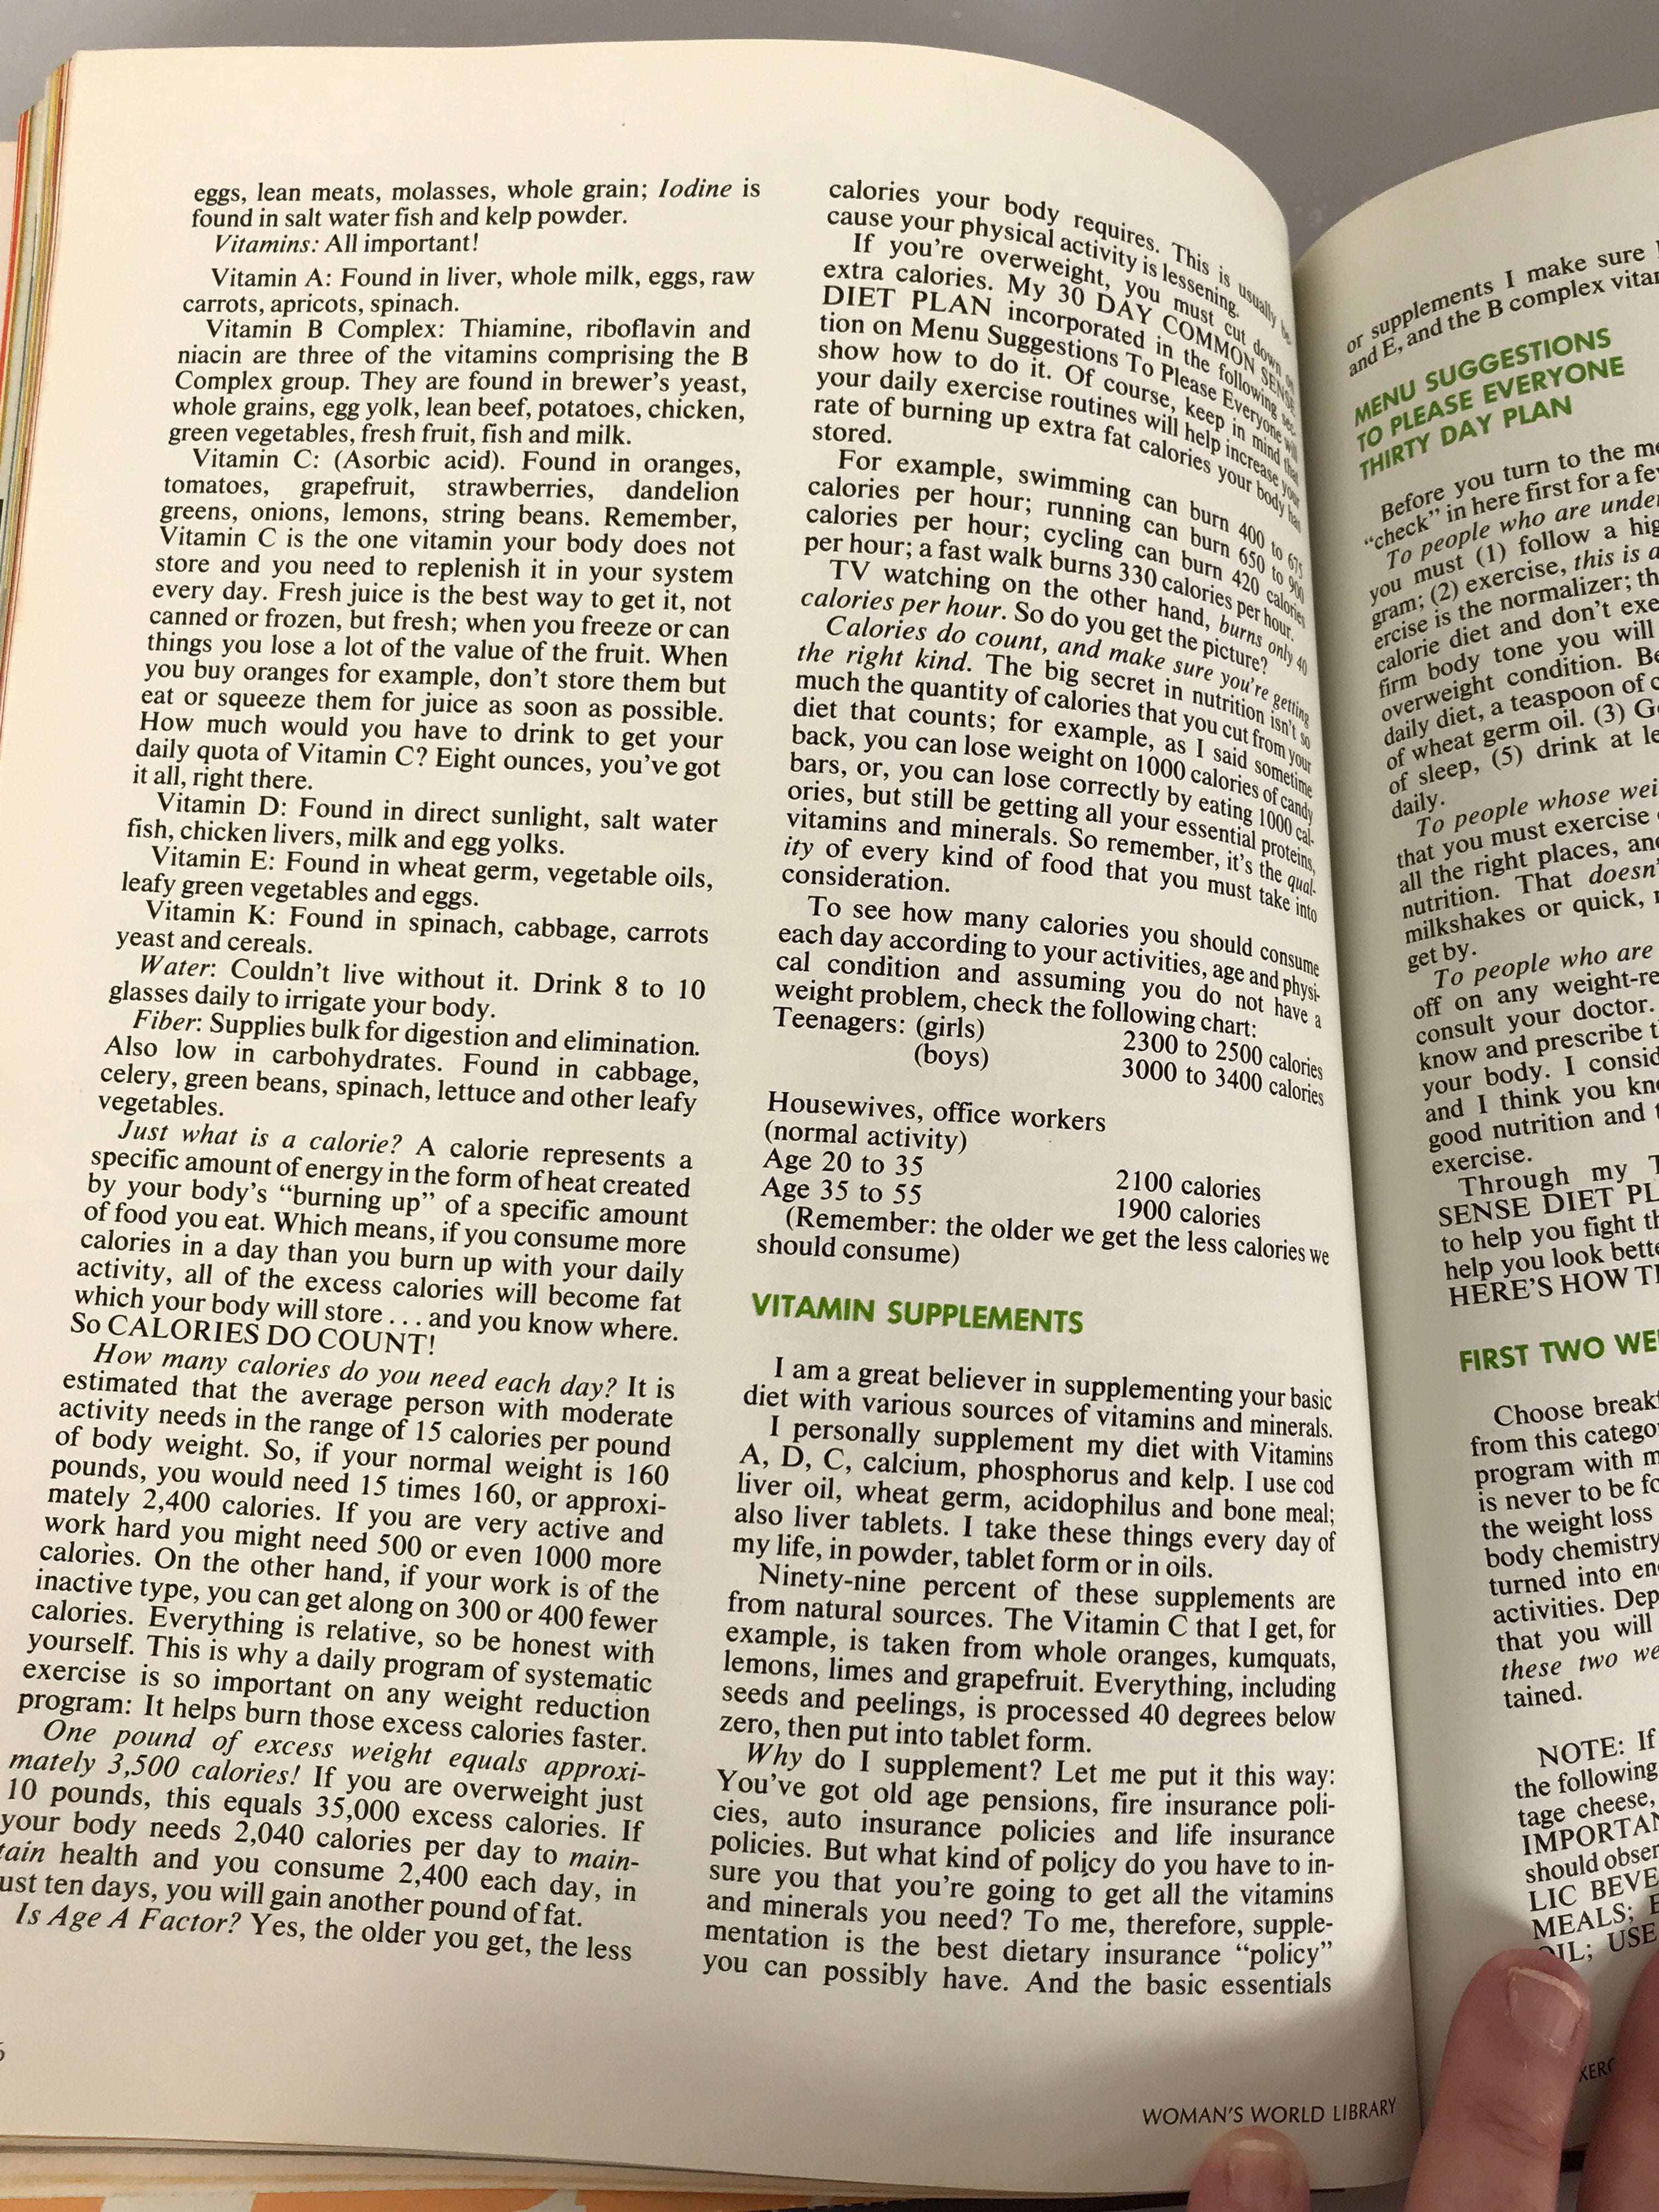 Vintage Jack La Lanne's Slim and Trim Diet and Exercise Guide 1969 HC